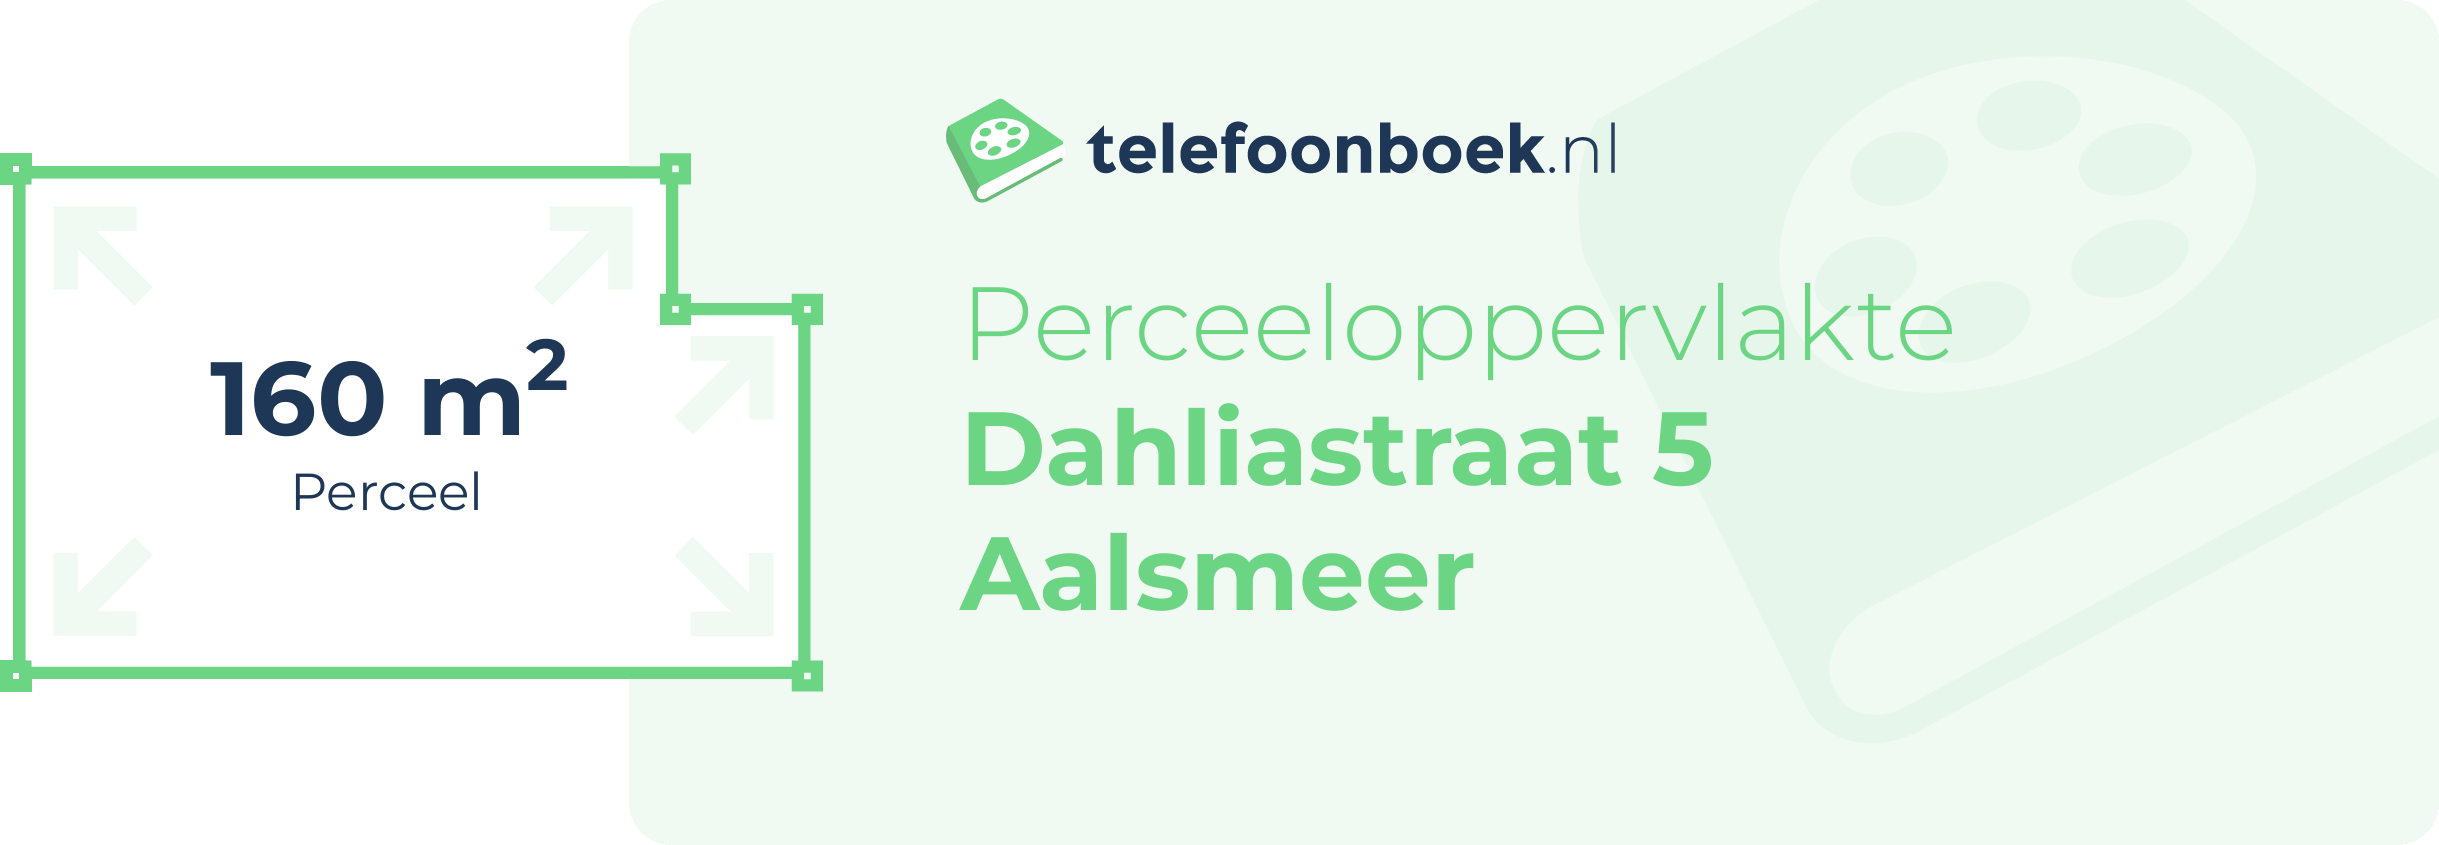 Perceeloppervlakte Dahliastraat 5 Aalsmeer